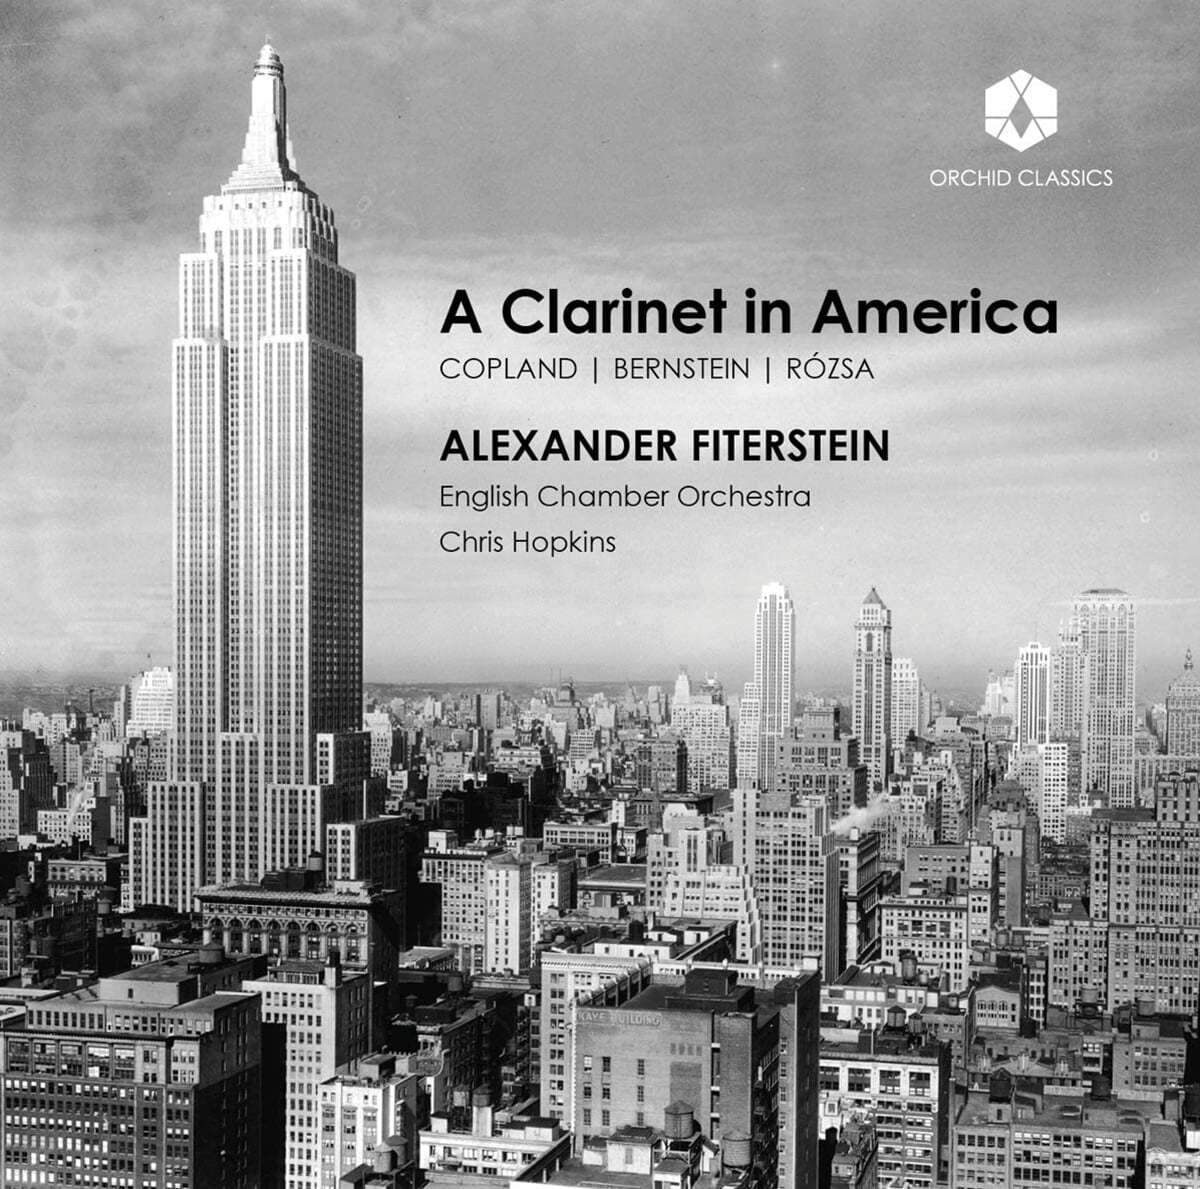 Alexander Fiterstein 코플랜드 / 번스타인 / 로자: 미국의 클라리넷 음악 (Copland / Bernstein / Rozsa: A Clarinet in America) 